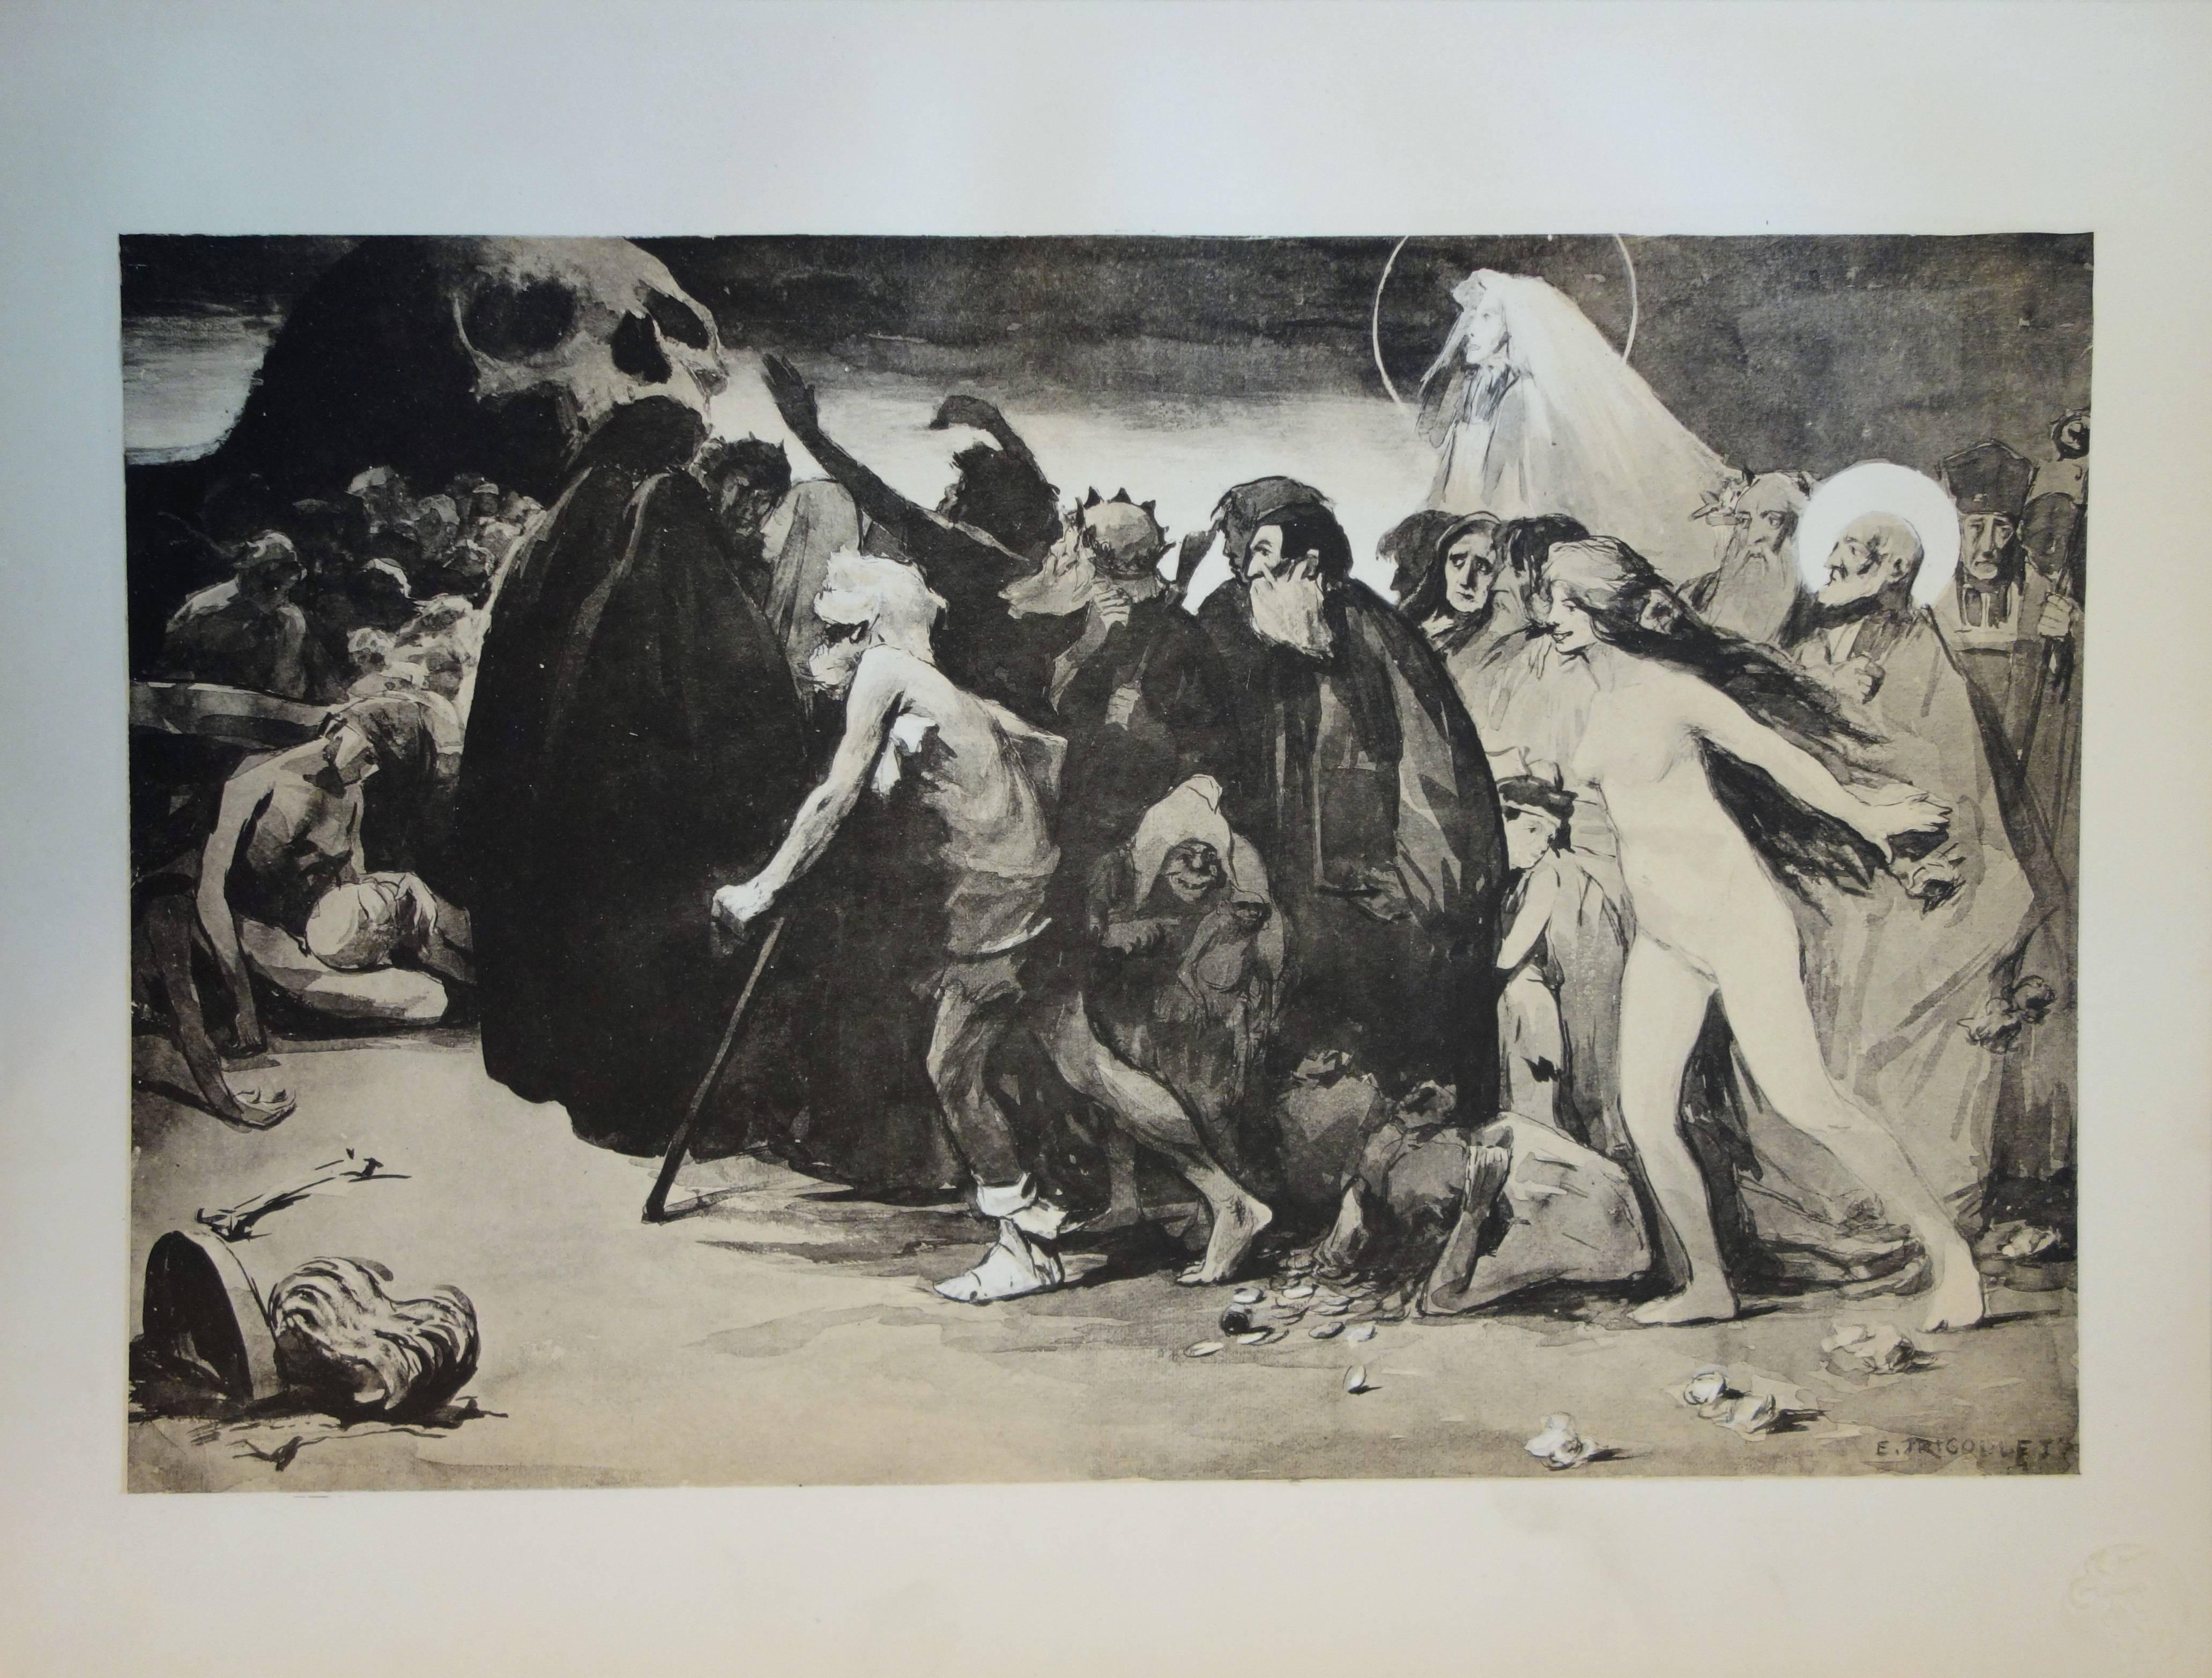 Eugène Trigoulet Figurative Print - Le chemin de la mort - original lithograph (1897/98)